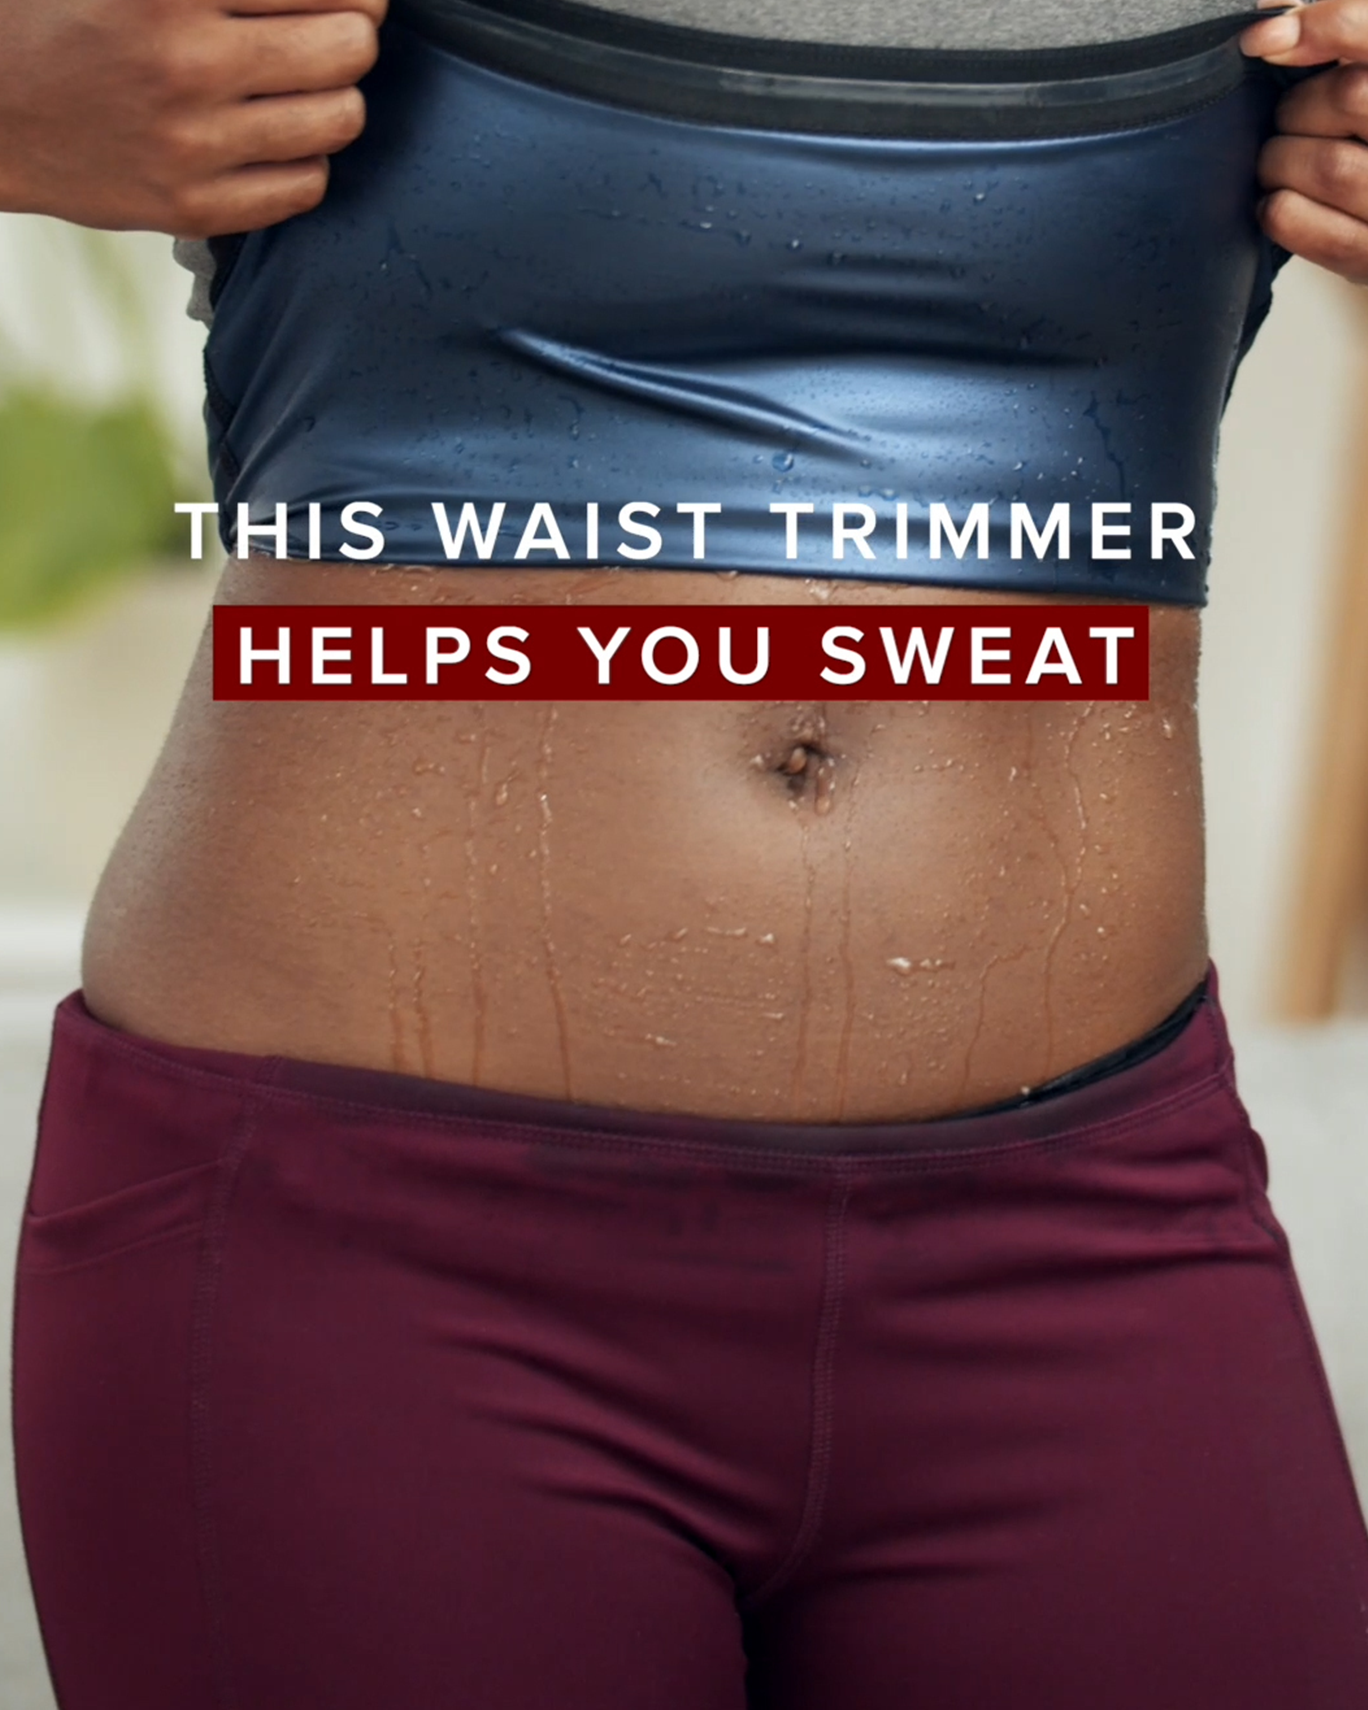 XCREET sweat Belt, Slimming belt, Waist shaper, Tummy Trimmer